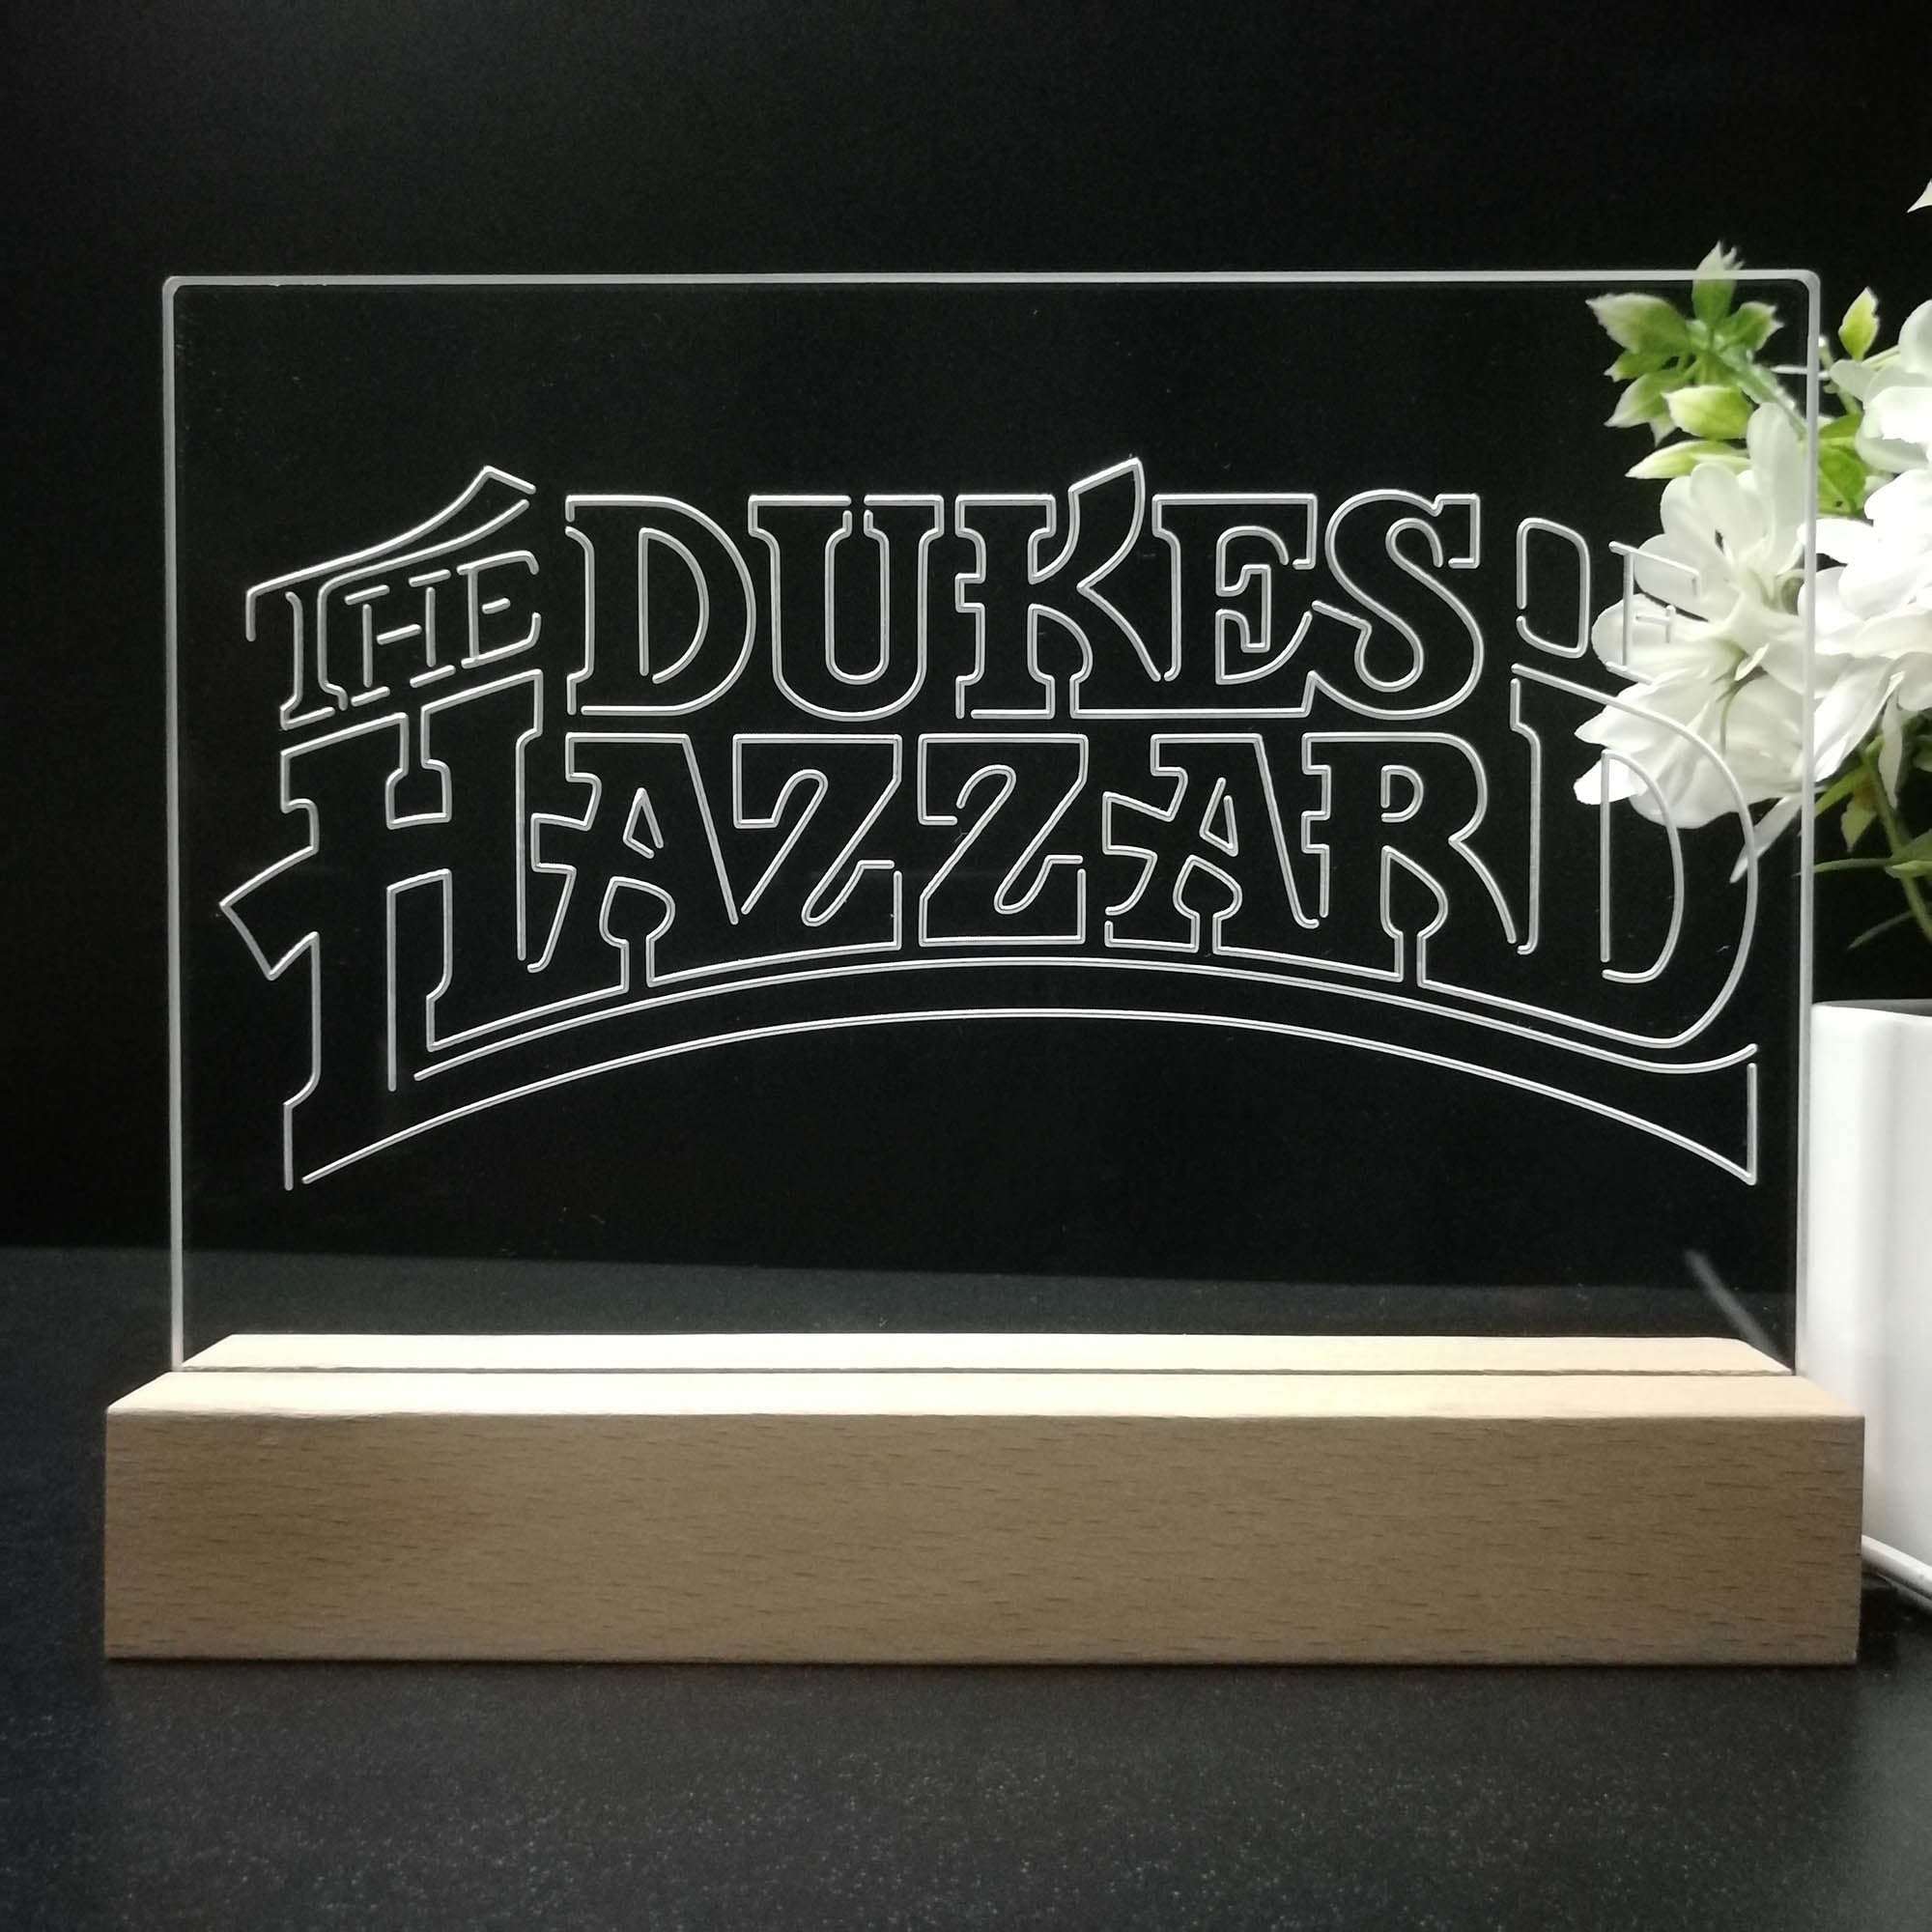 The Dukes of Hazzard 3D Illusion Night Light Desk Lamp